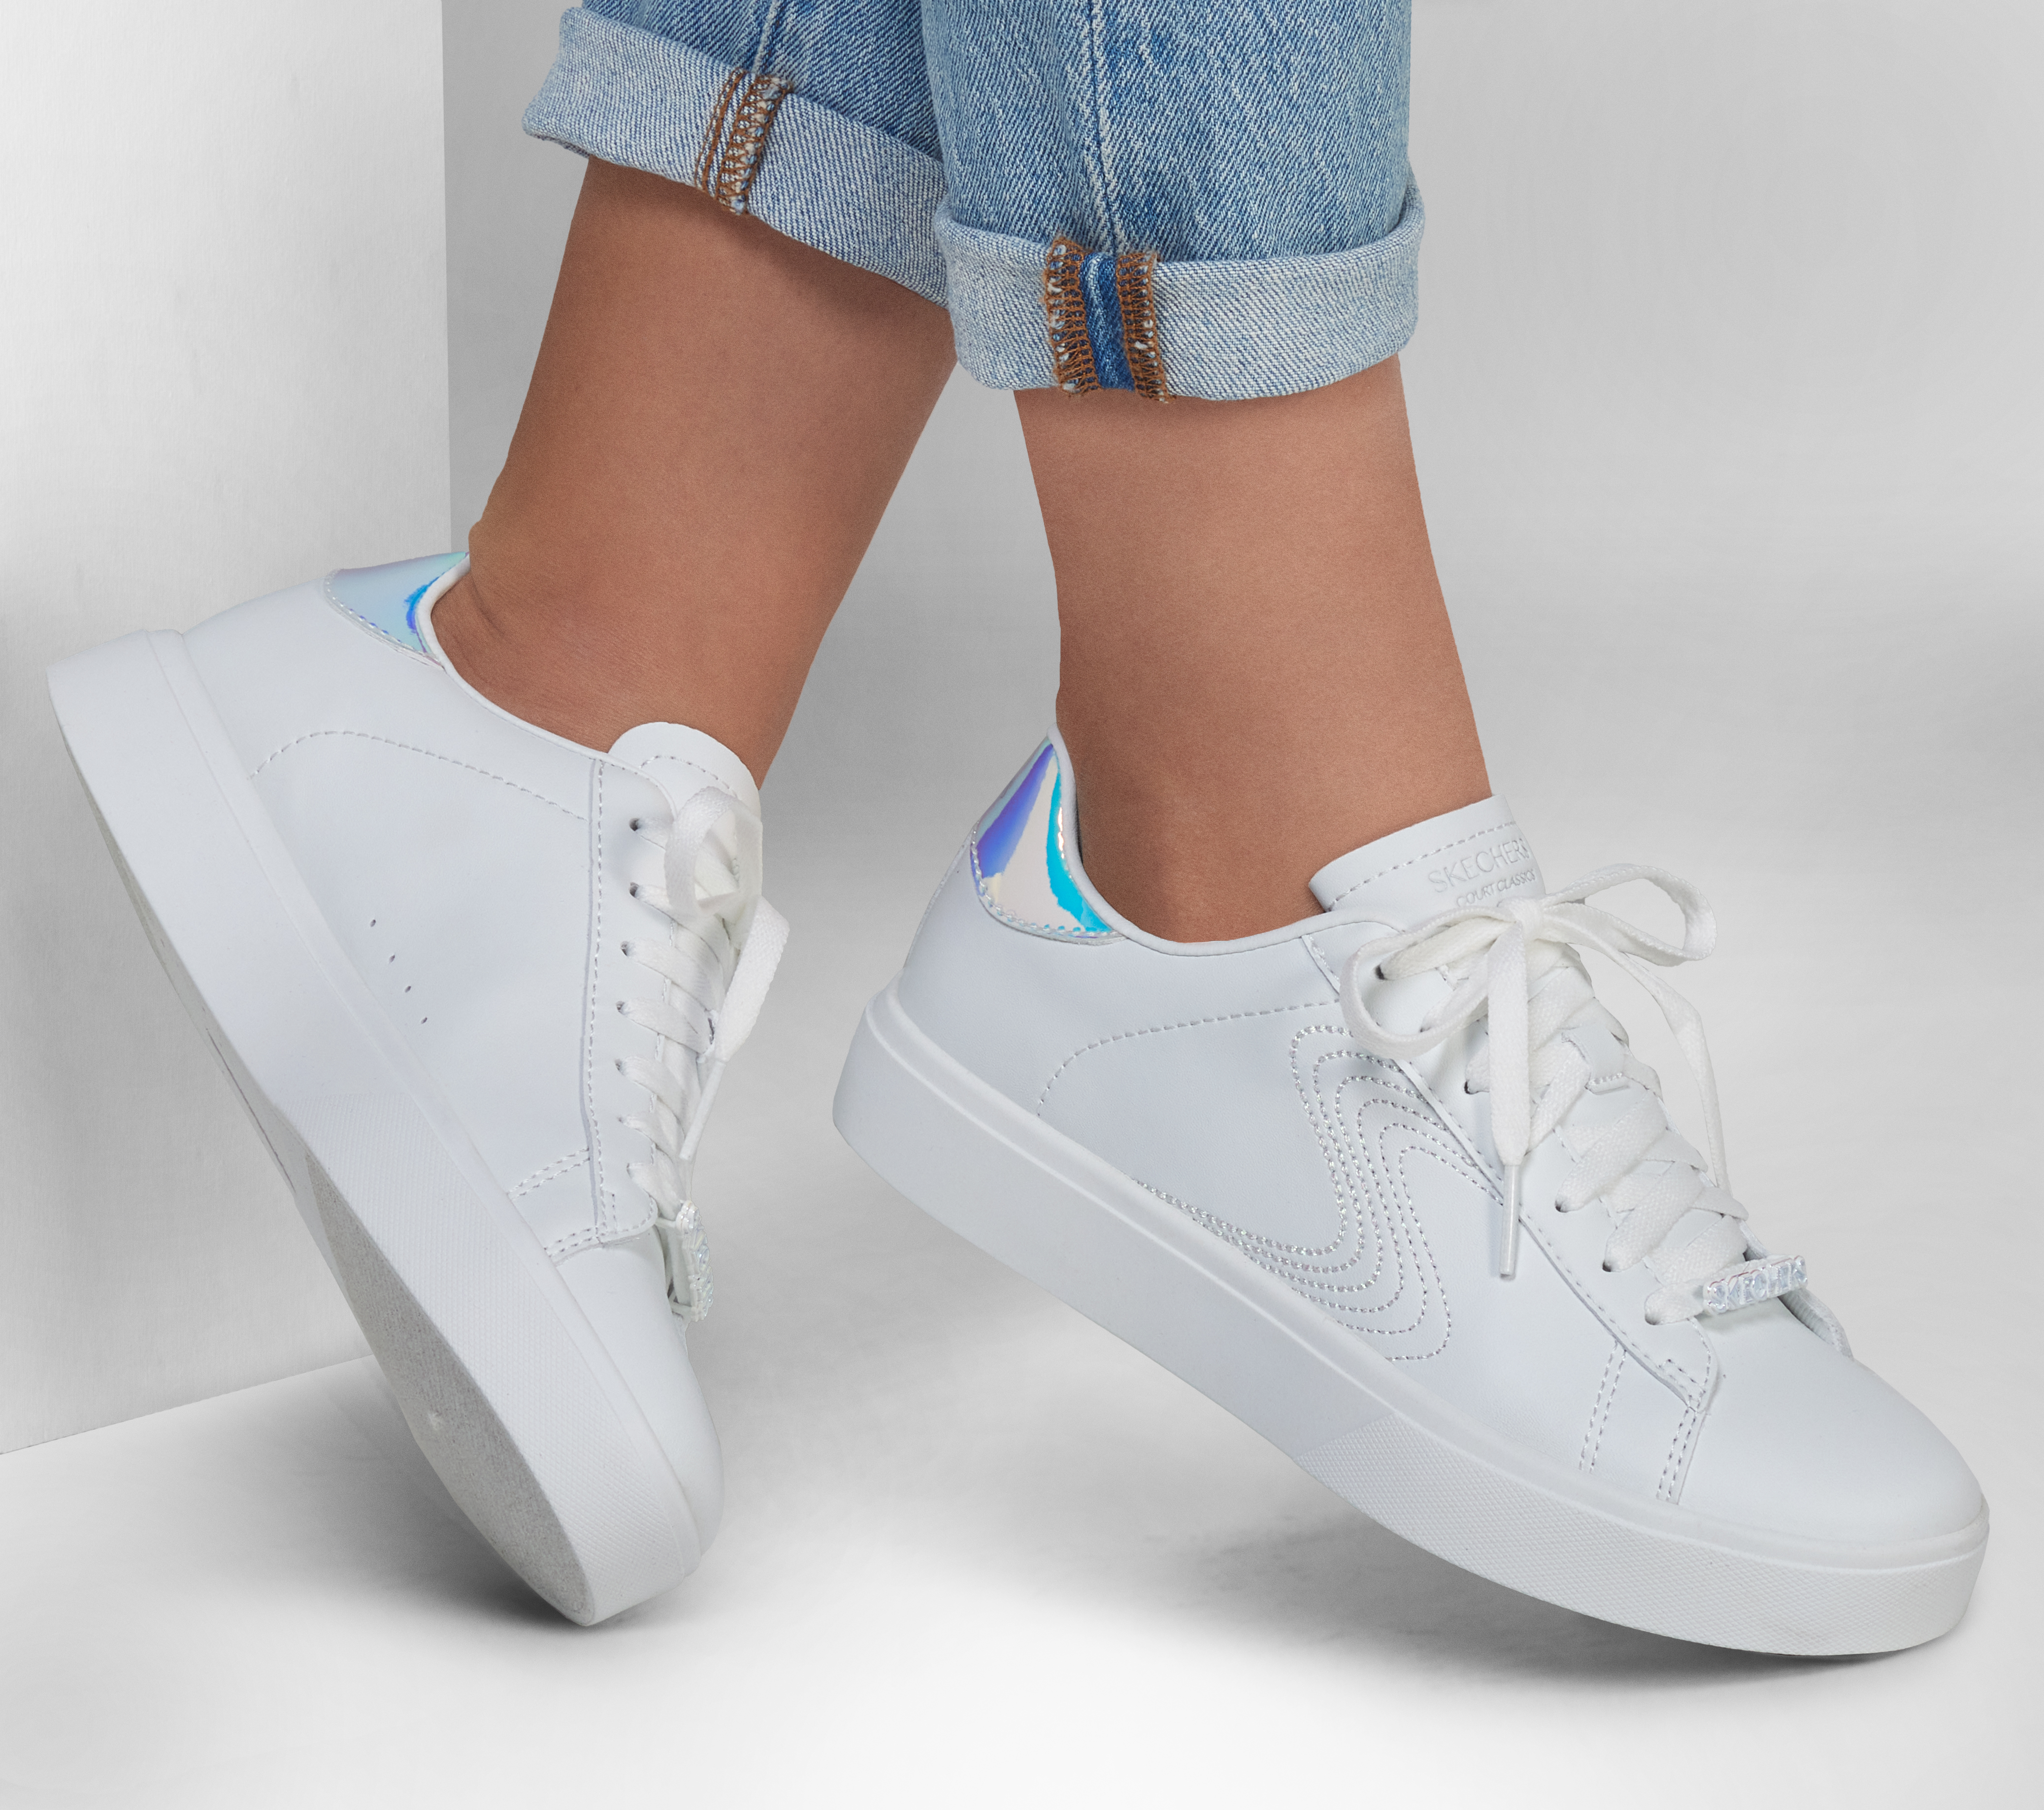 Skechers Women's Eden LX - Magical Dream Sneaker Size 5.0 White/Silver Synthetic